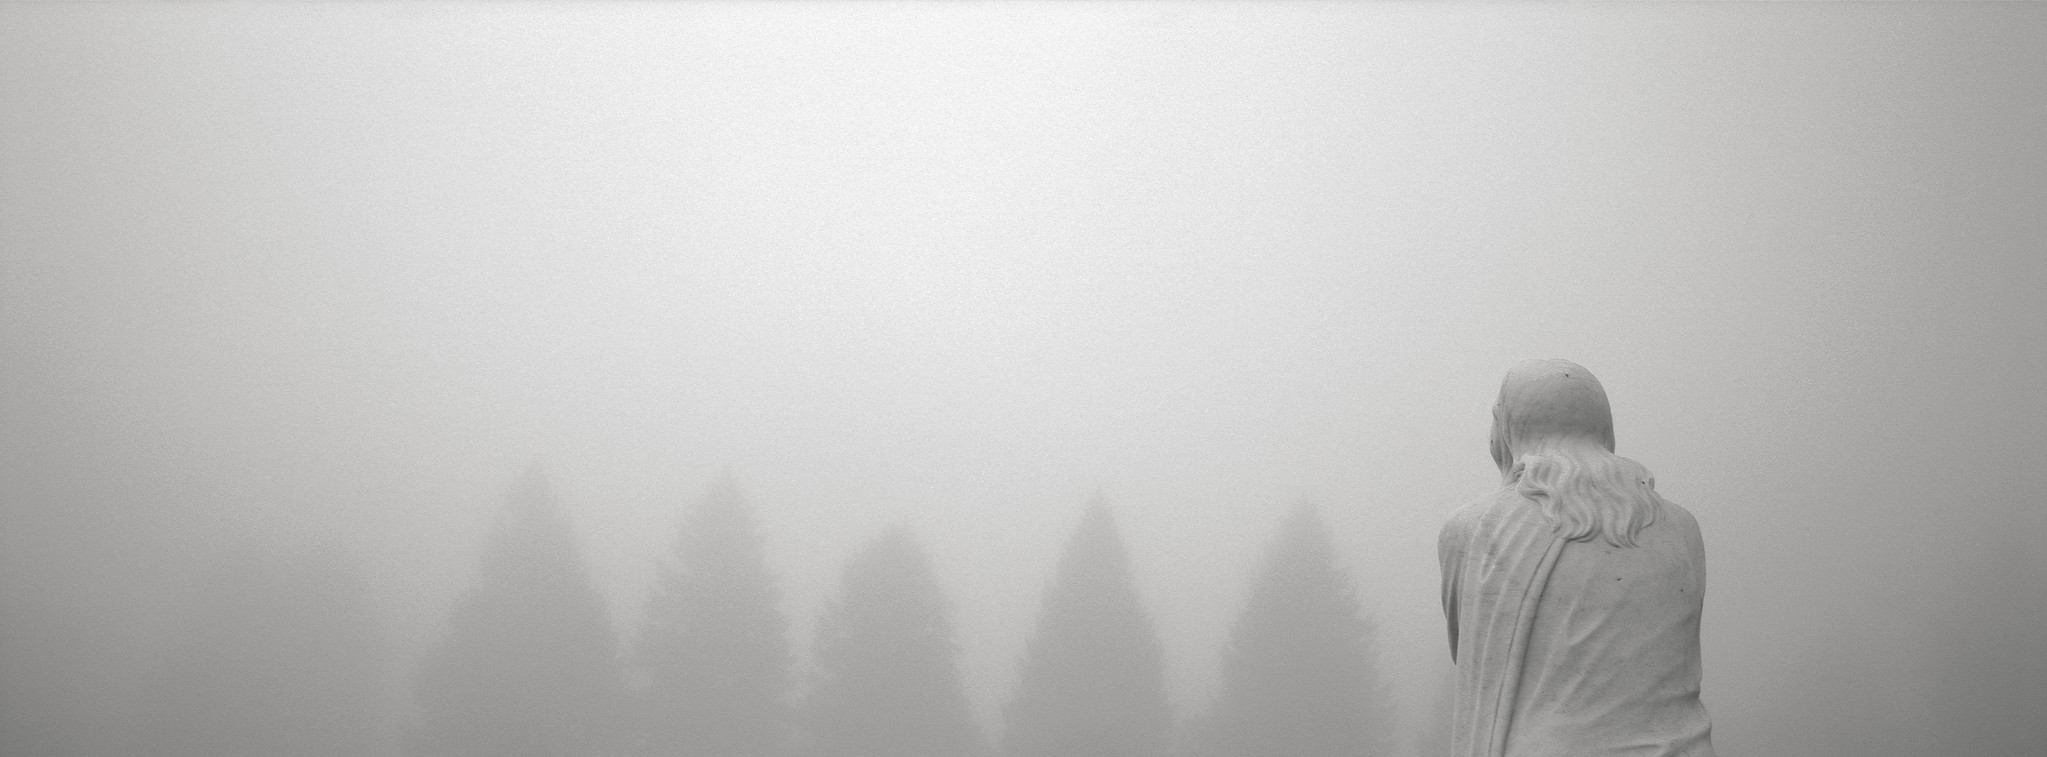 Jesus in the Fog, Portland | by austin granger